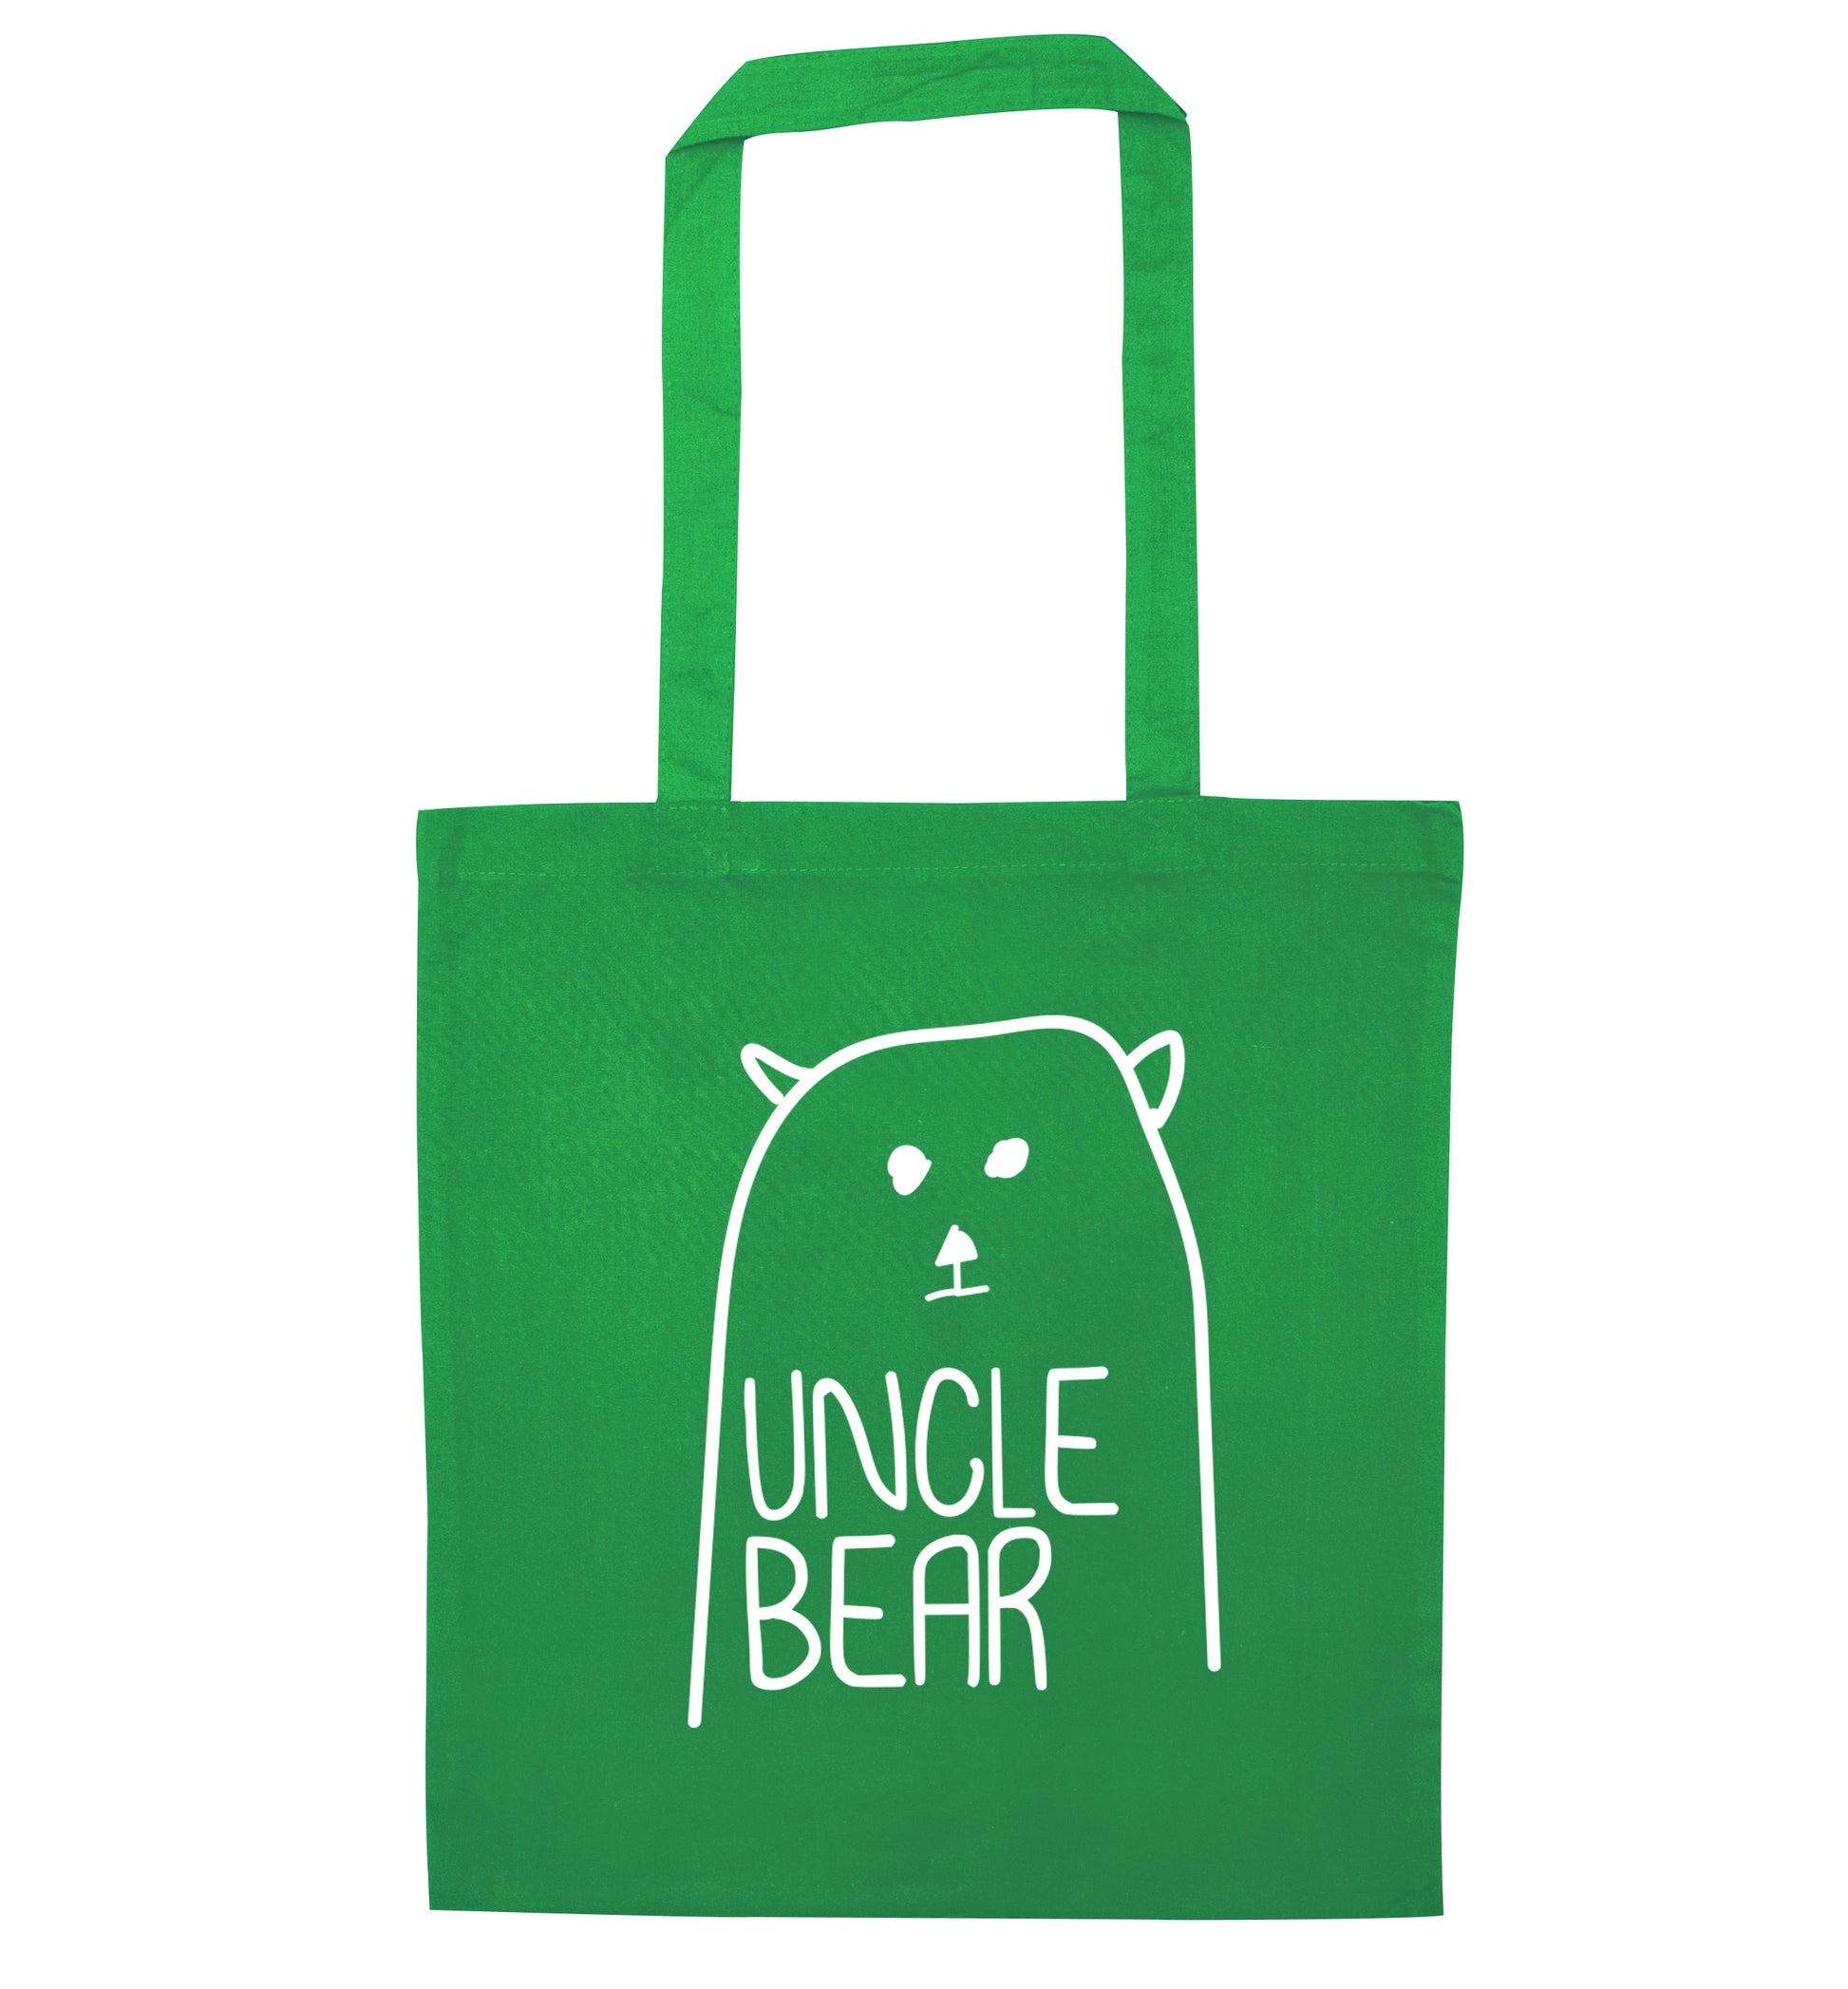 Uncle bear green tote bag